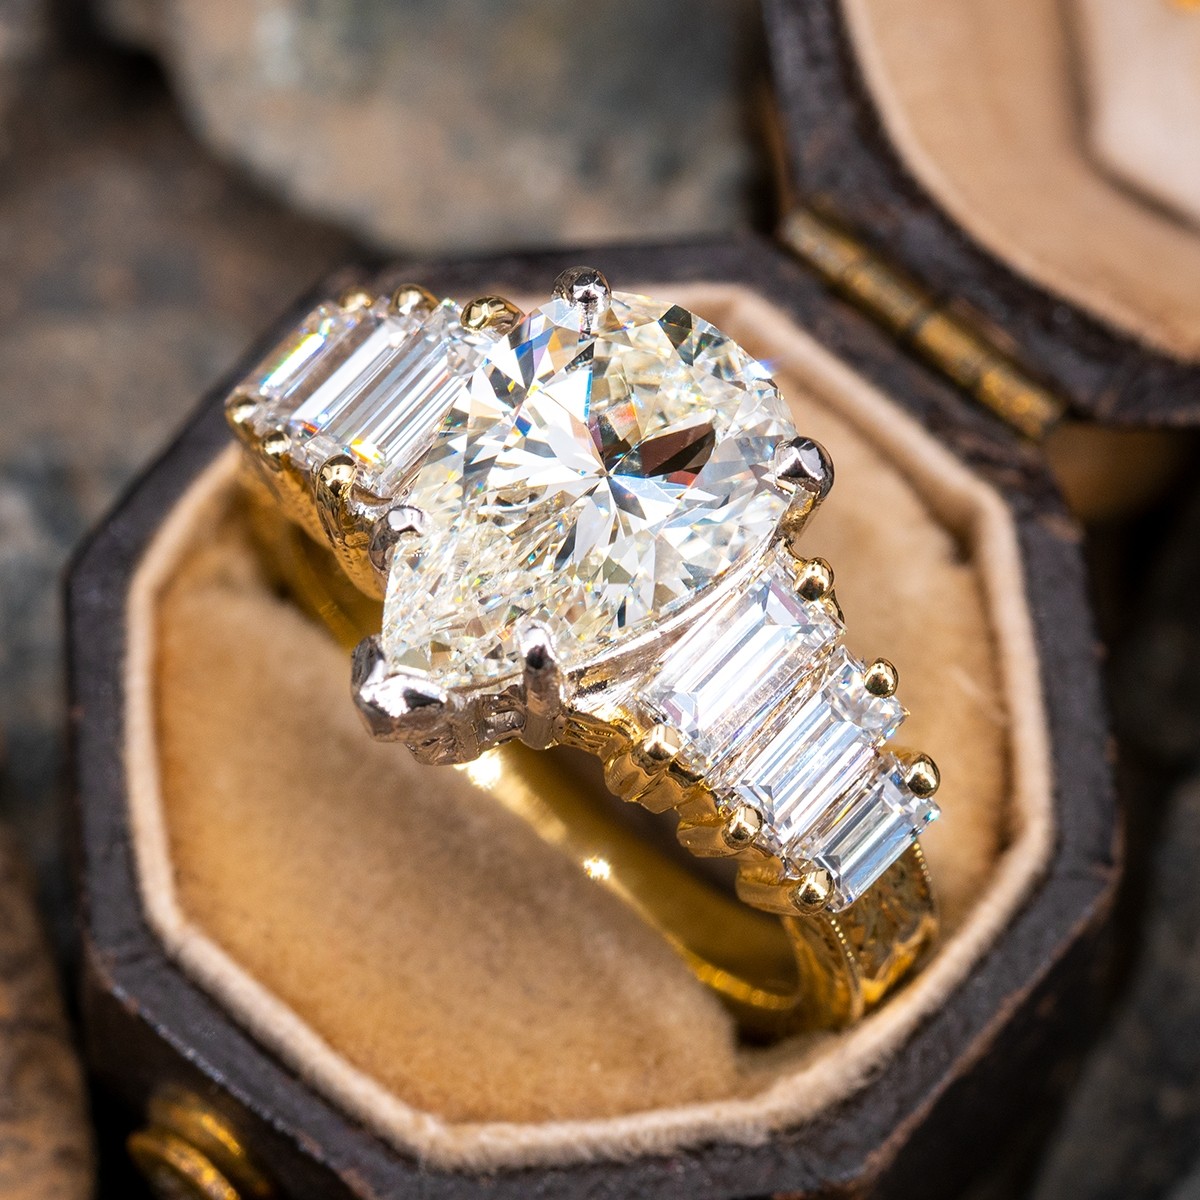 8.0 CT Pear Cut Lab Grown Diamond Ring CVD Diamond E Color VVS2 Clarity IGI  Certified at Rs 654123 | Diamond Rings in Surat | ID: 24539474088